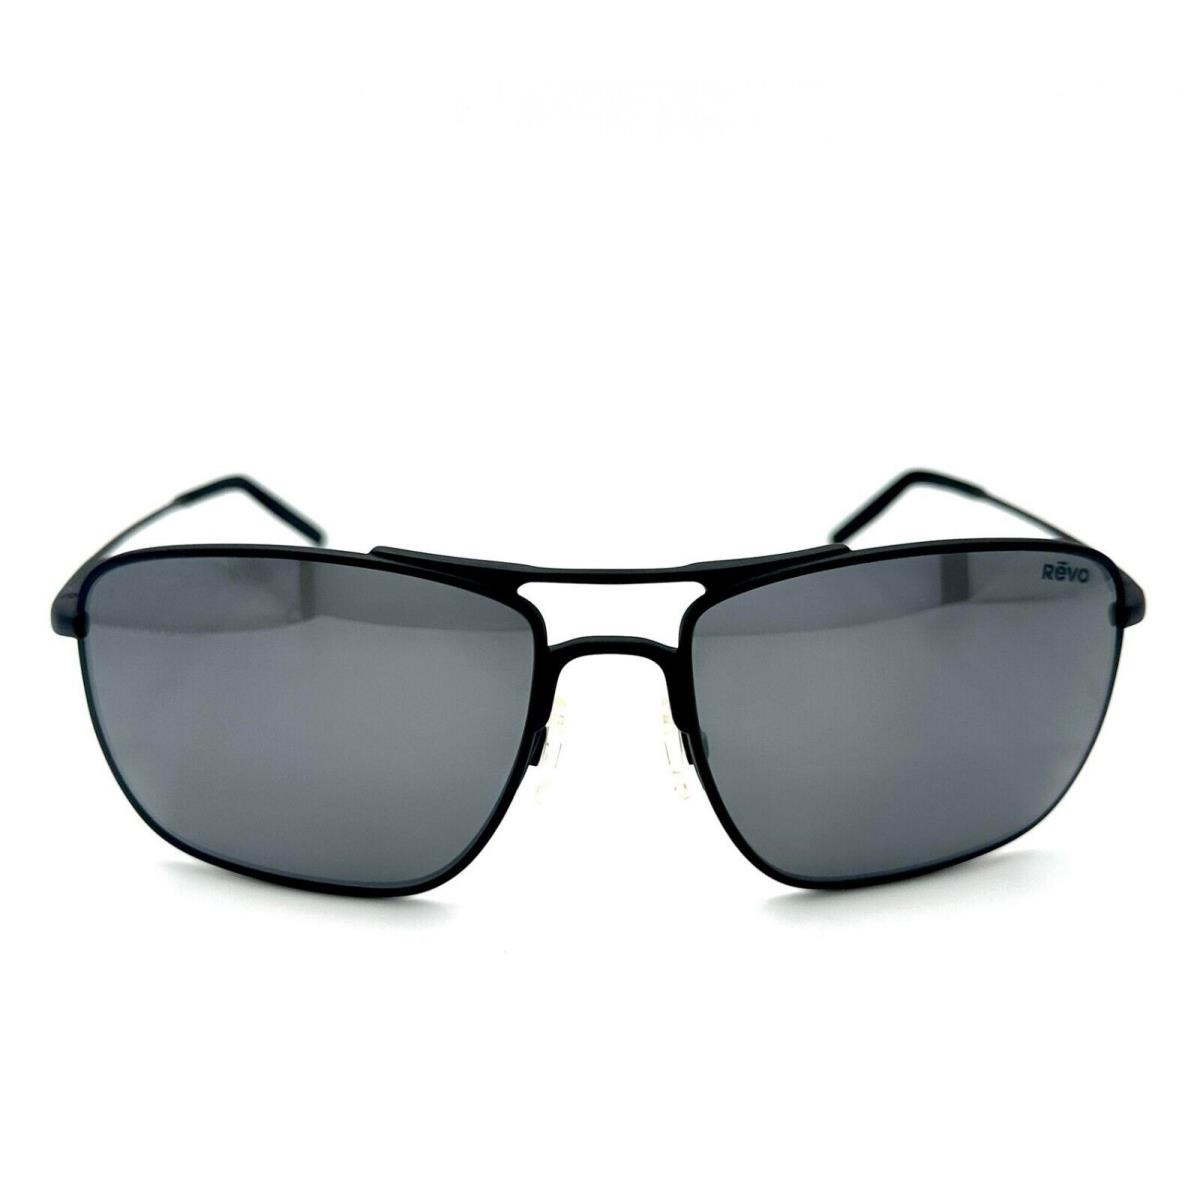 Revo RE3089 Groundspeed Sunglasses 02 GY Black/graphite Lens 59mm